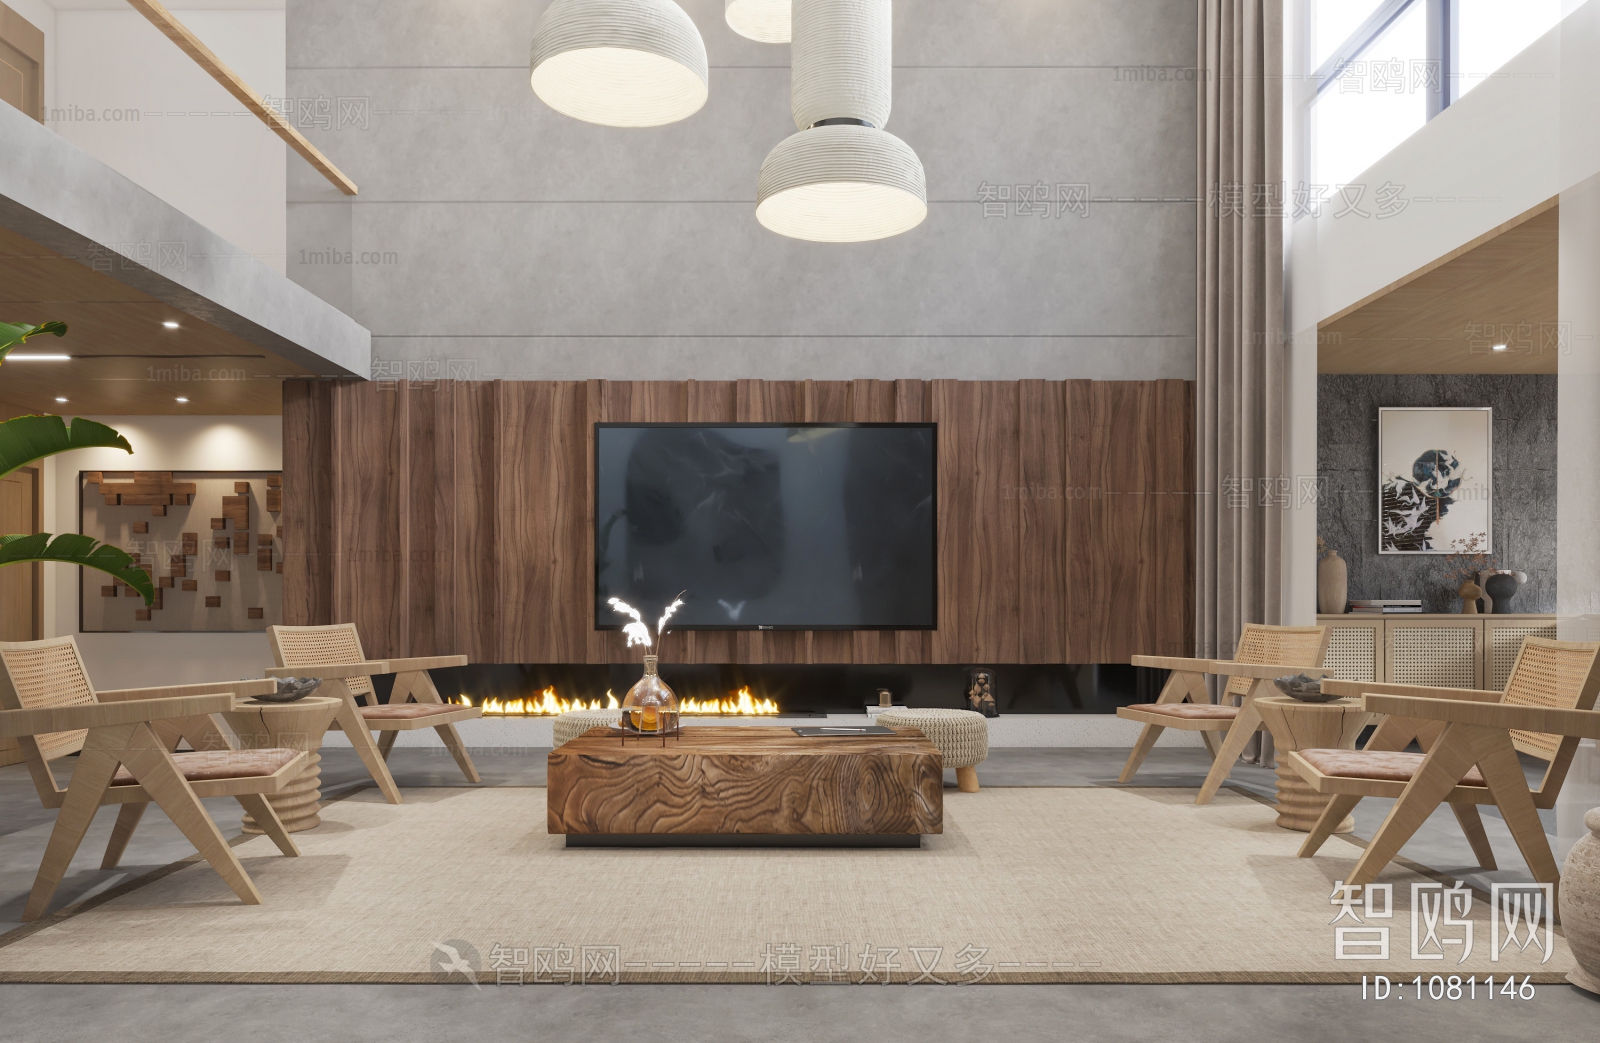 Japanese Style Wabi-sabi Style A Living Room